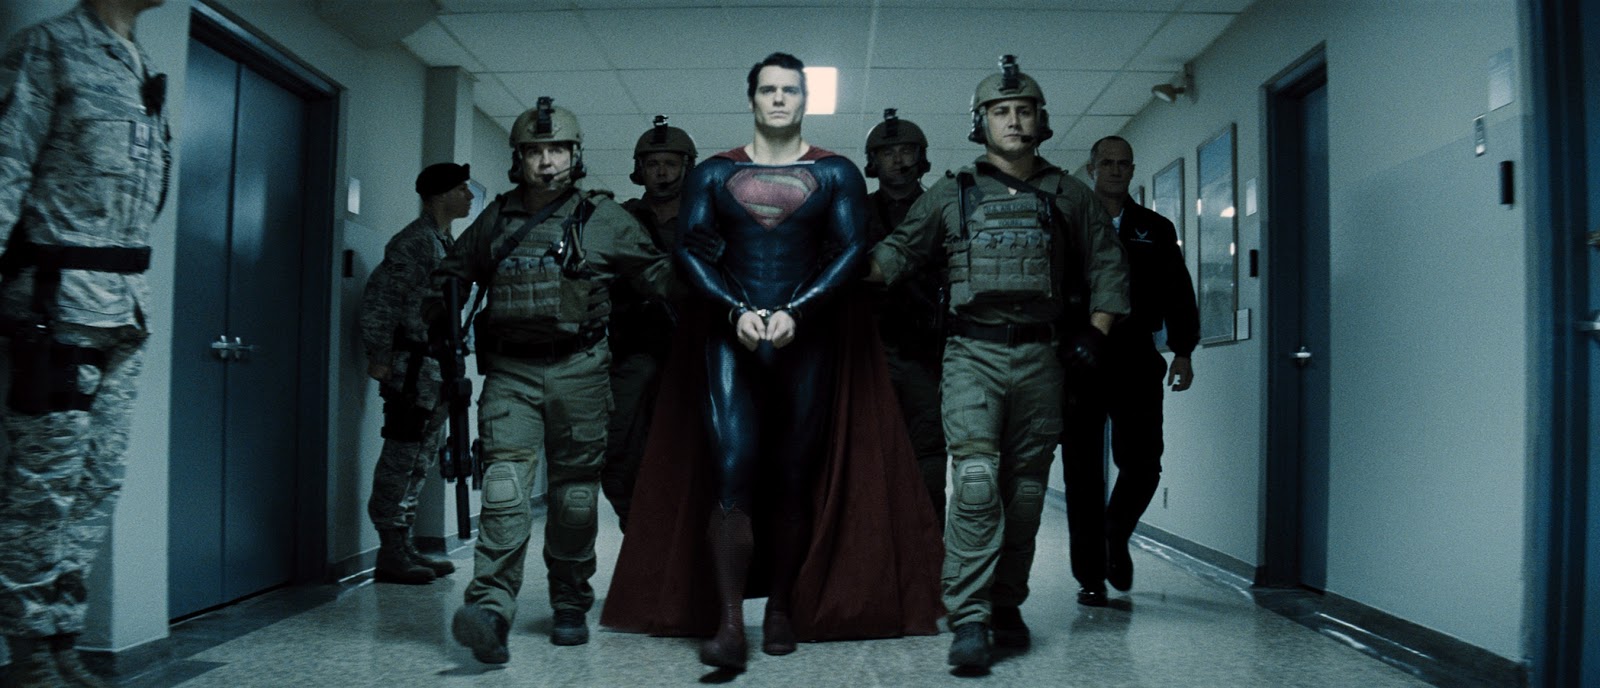 Henry Cavill's Superman return may not happen after all - NZ Herald